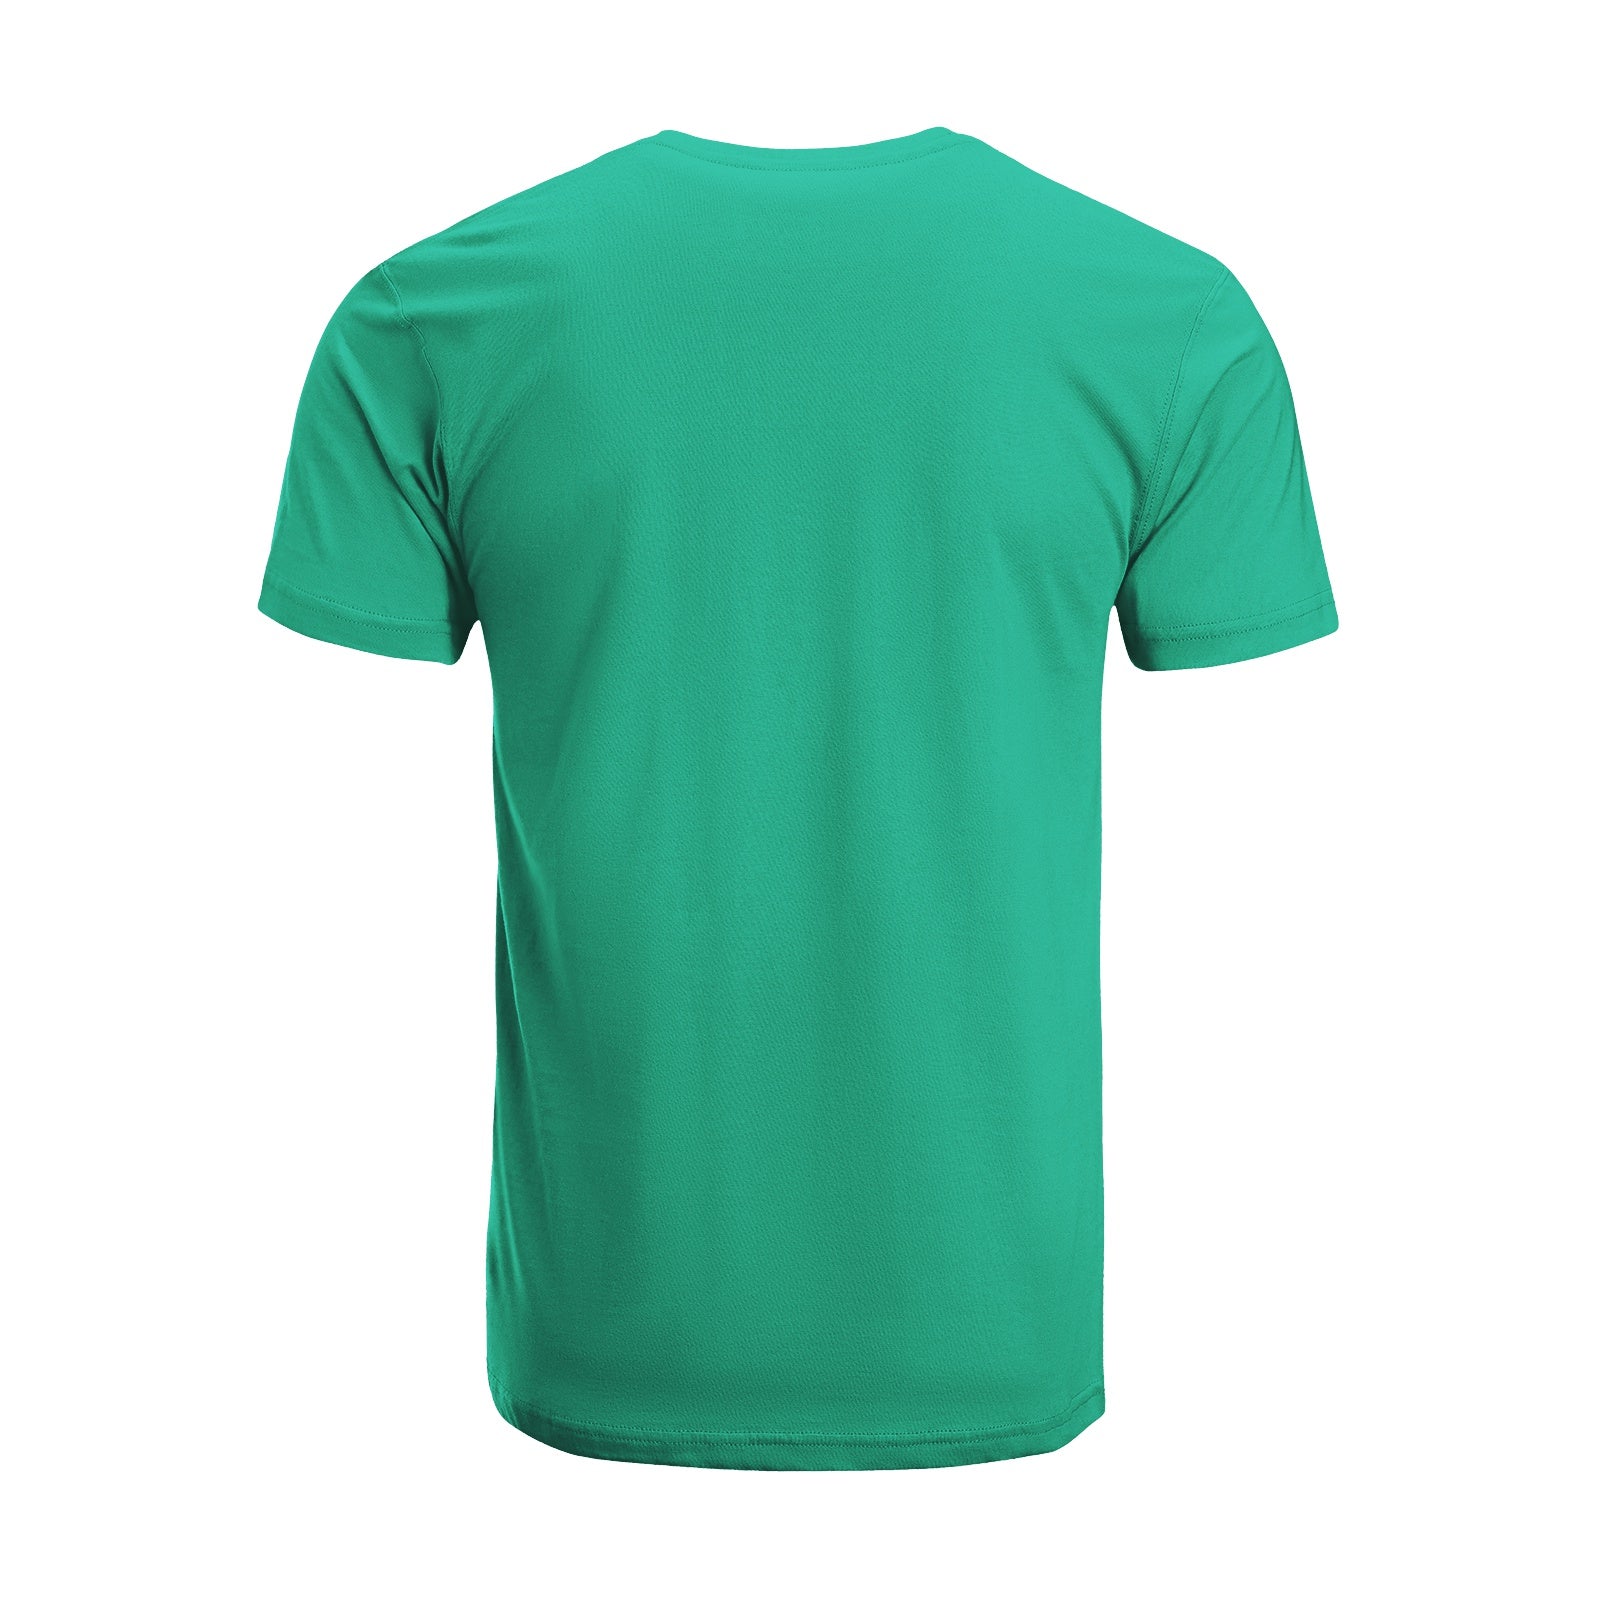 Unisex Short Sleeve Crew Neck Cotton Jersey T-Shirt Gym No. 18 - Tara-Outfits.com